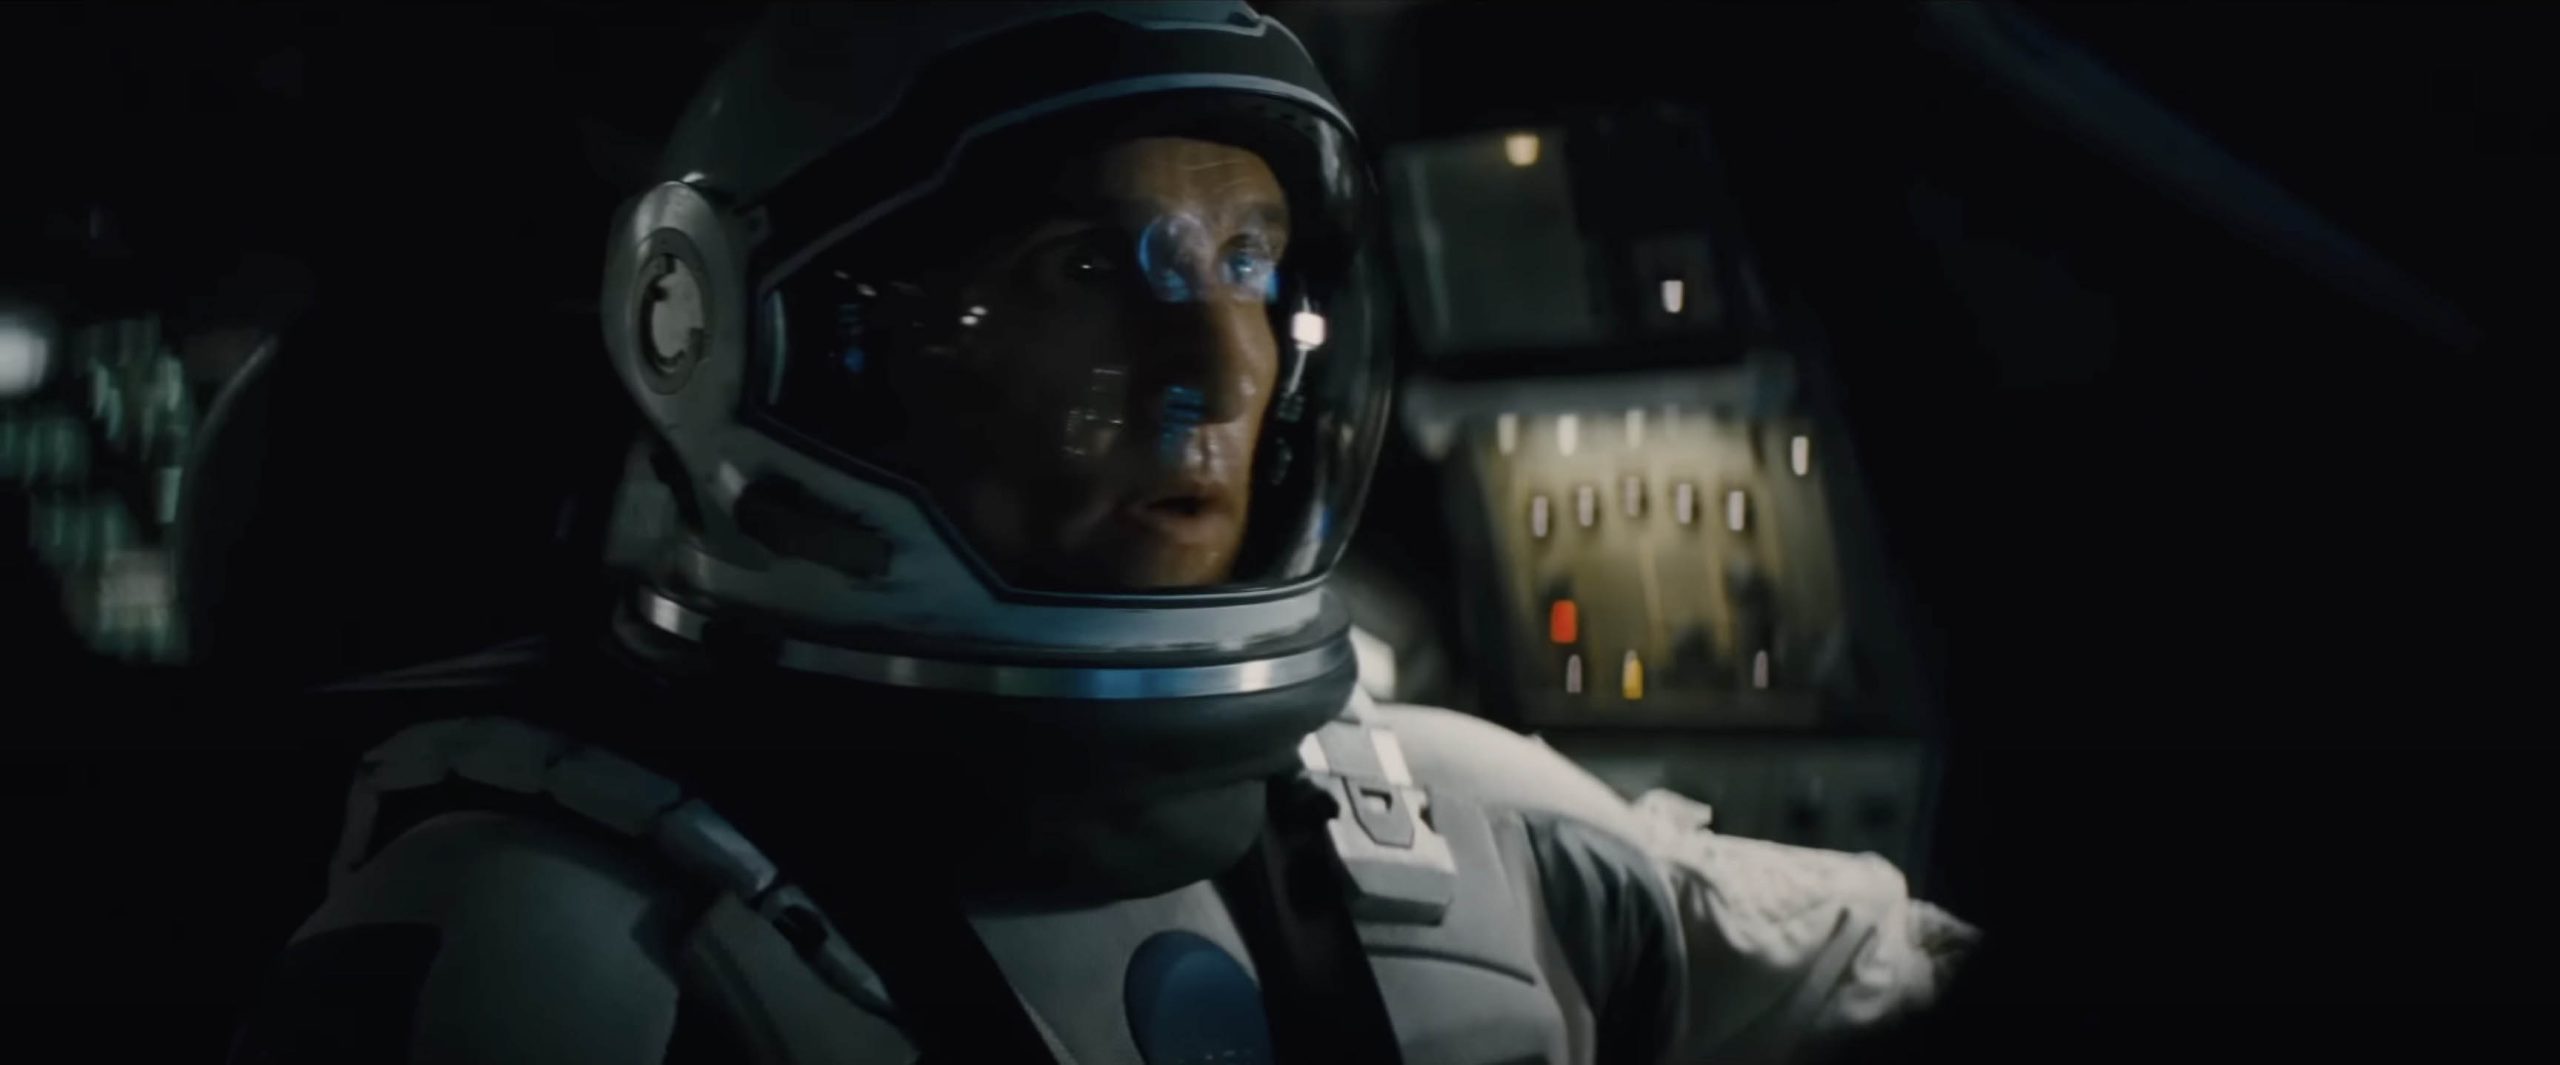 Interstellar (2014) starring Matthew McConaughey